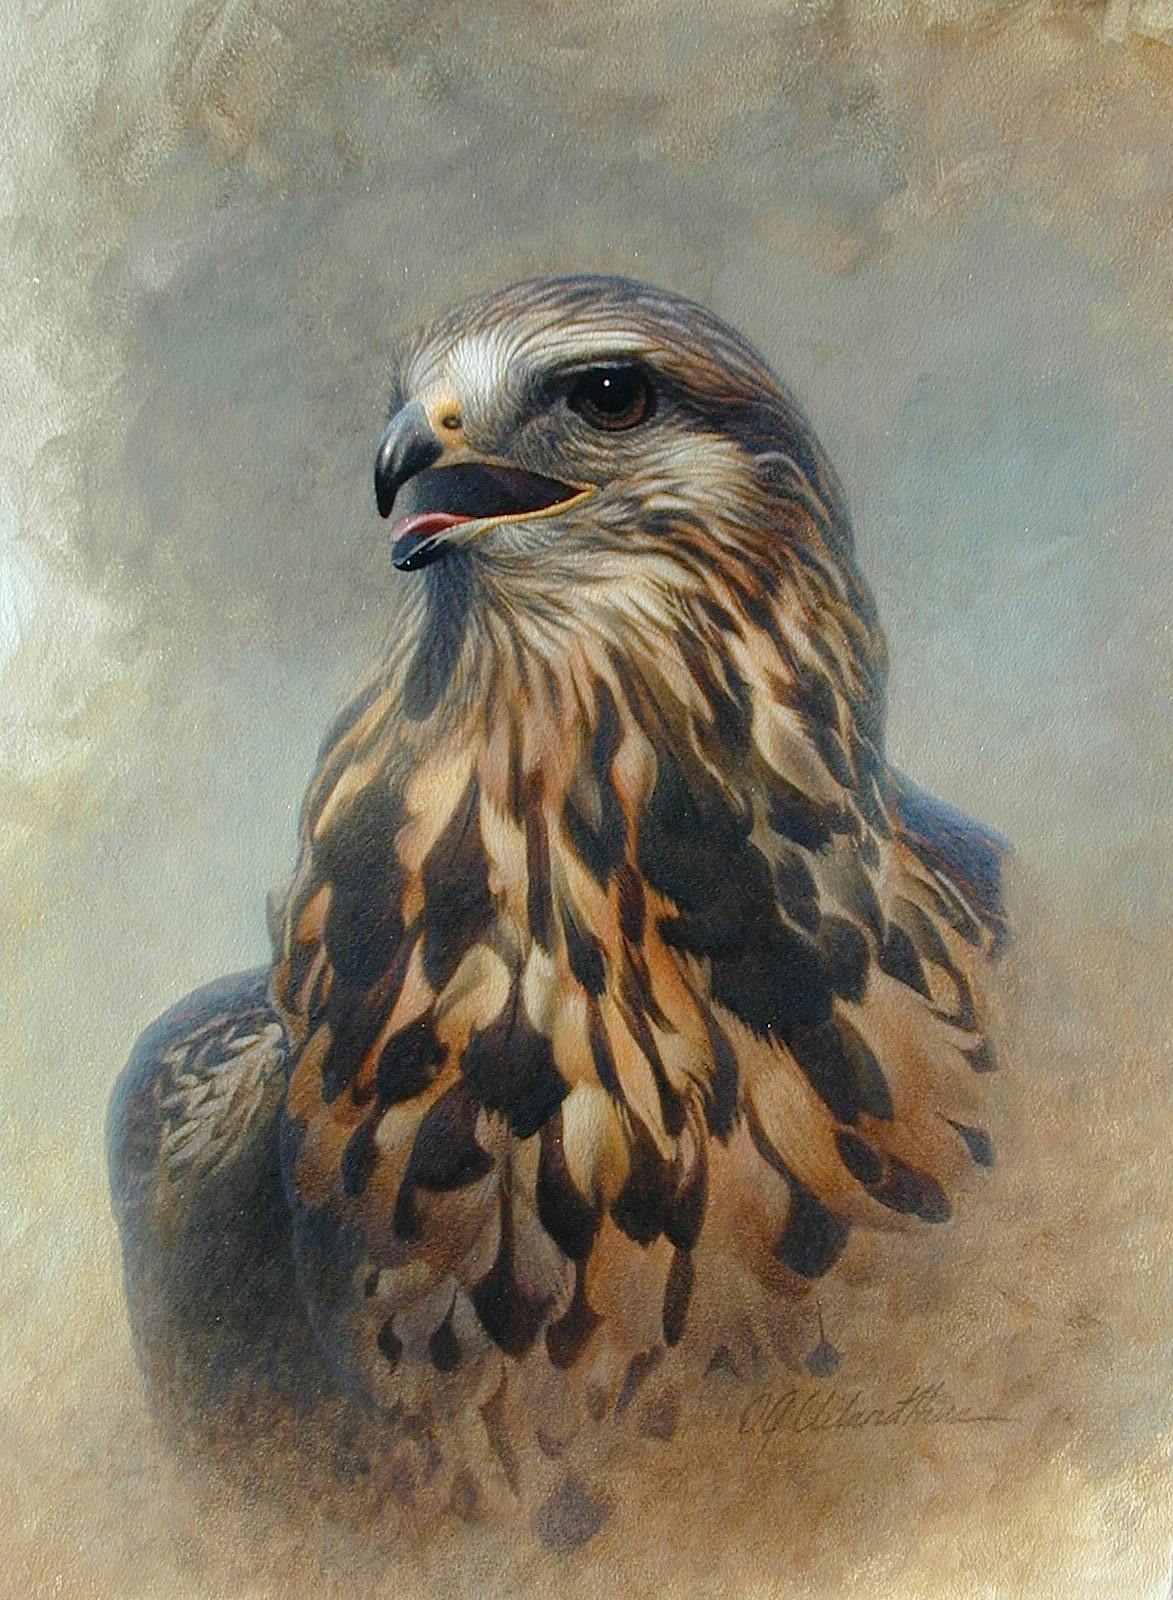 A portrait of a falcon